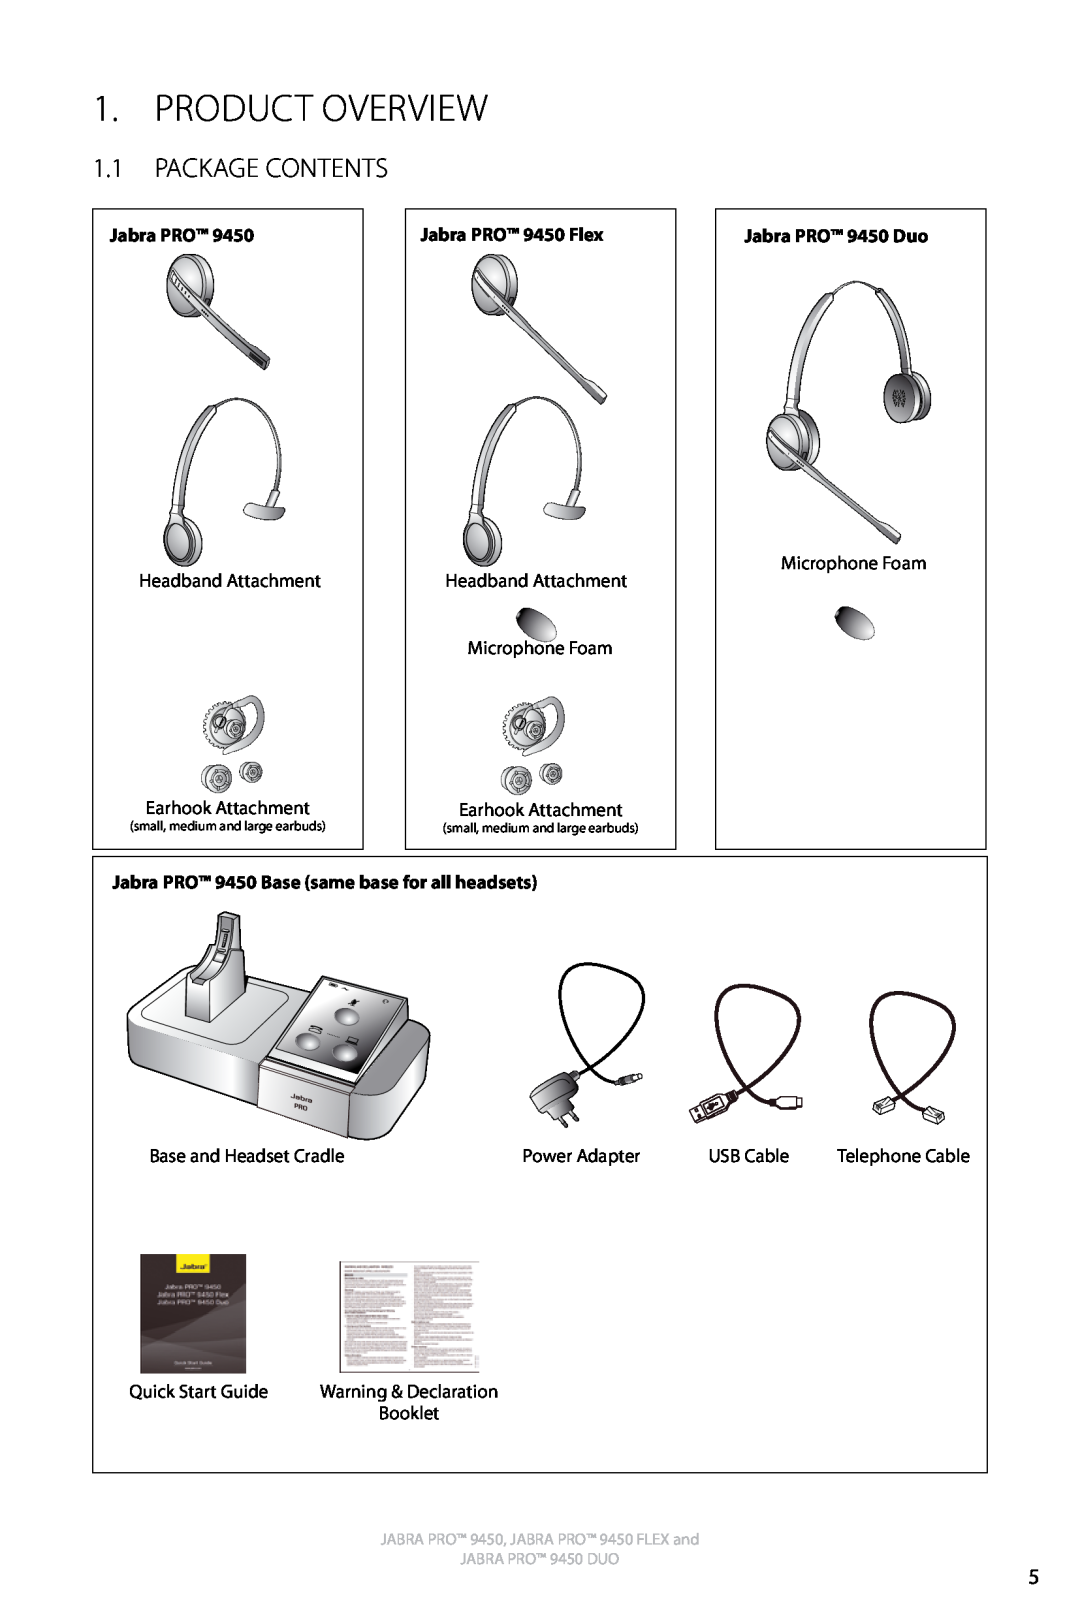 Jabra Product Overview, Package Contents, Jabra PRO 9450 Flex, Jabra PRO 9450 Base same base for all headsets 